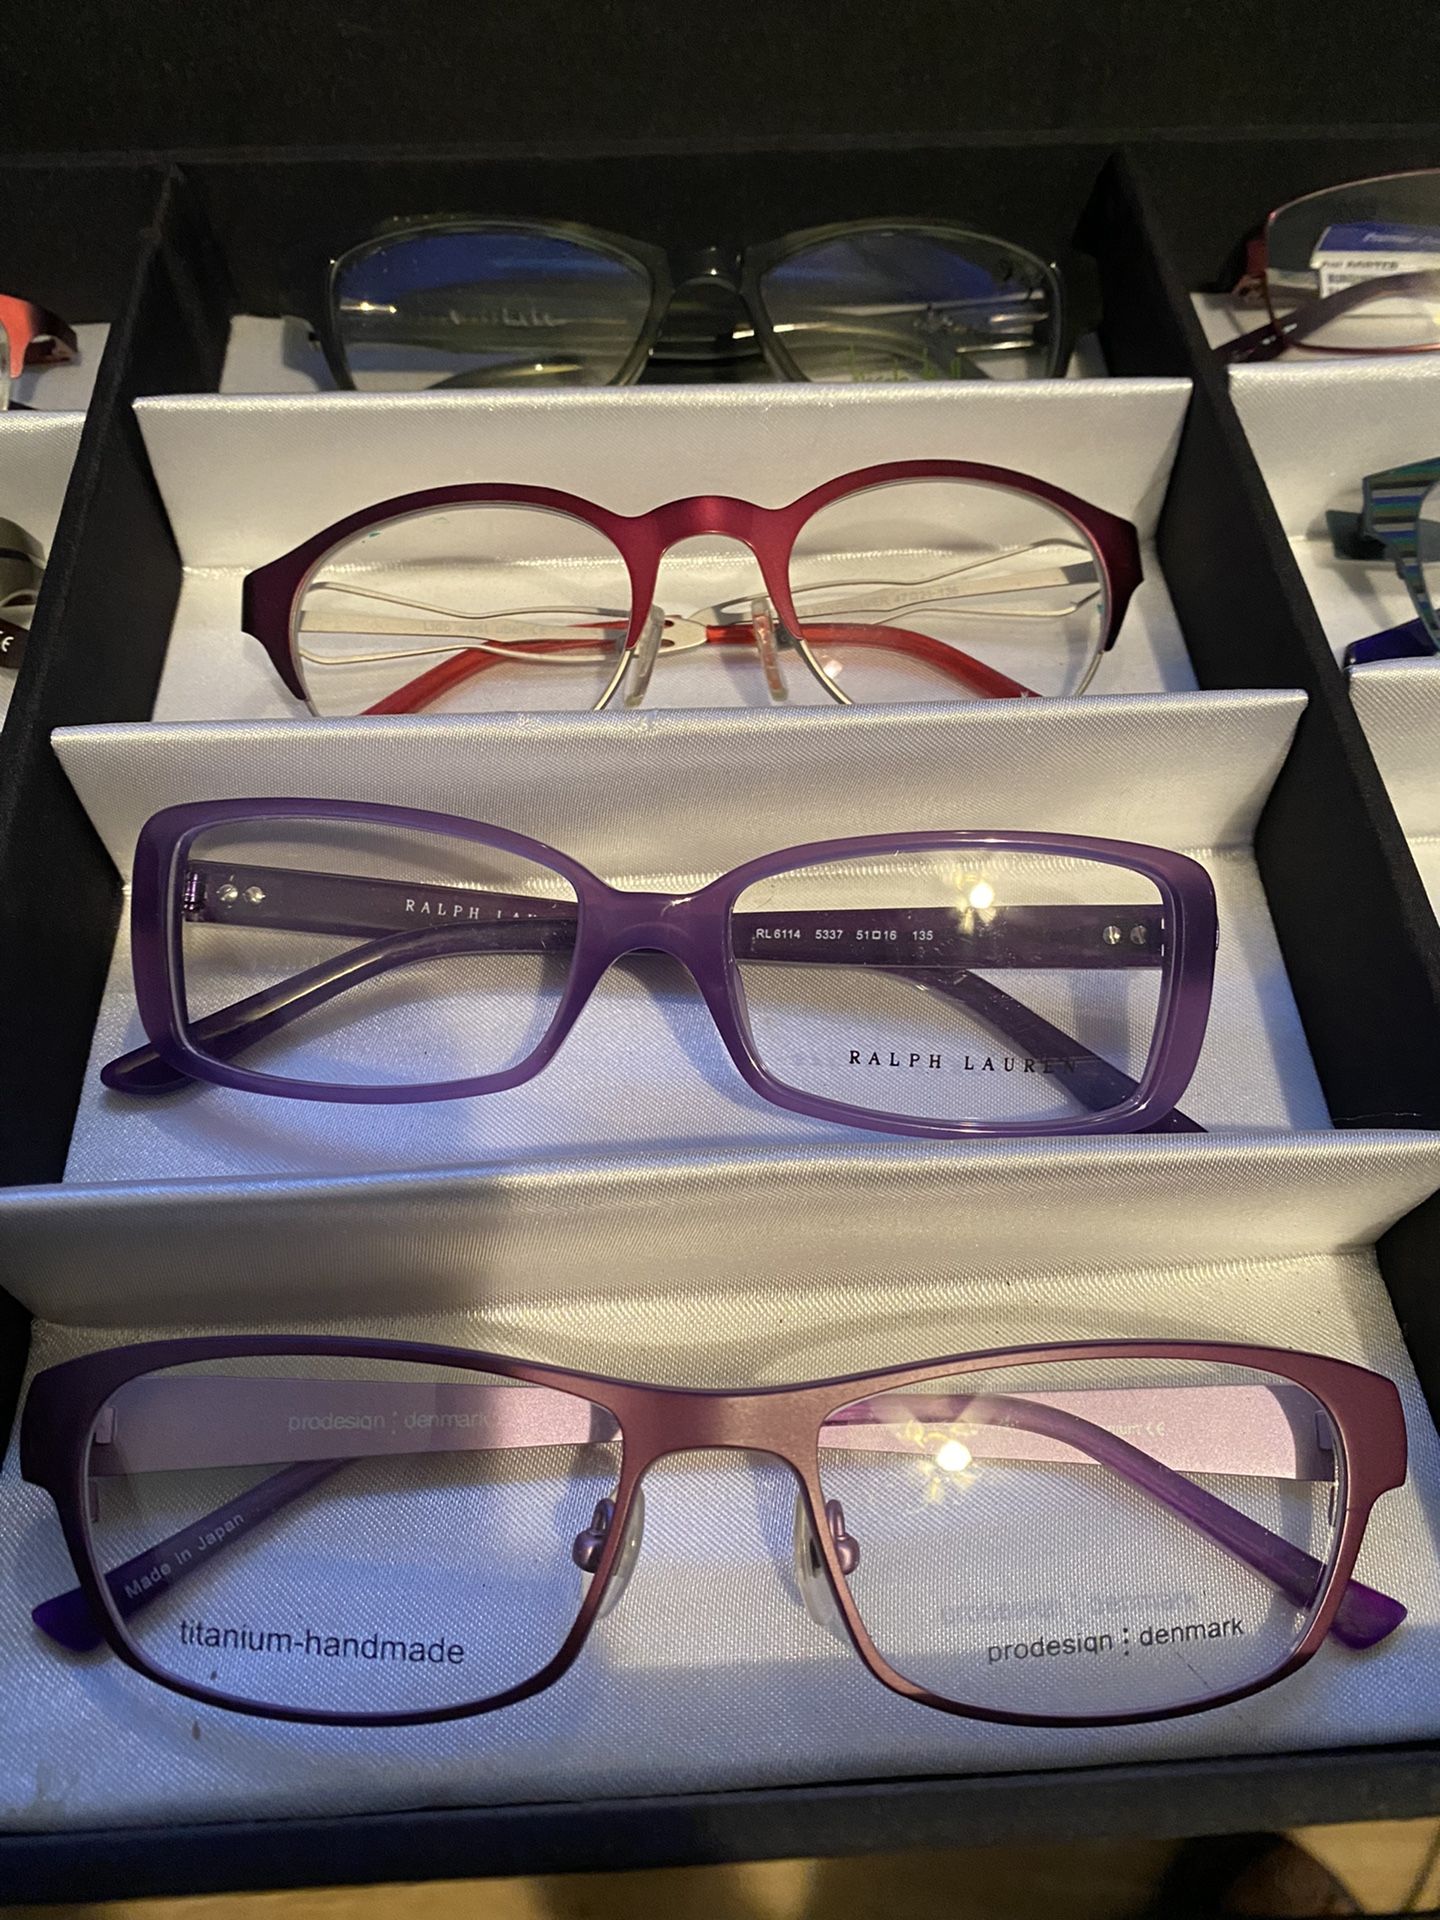 Brand new women’s eyeglasses. Good for single vision bifocals of aggressive lenses. Brand new from $25-$50